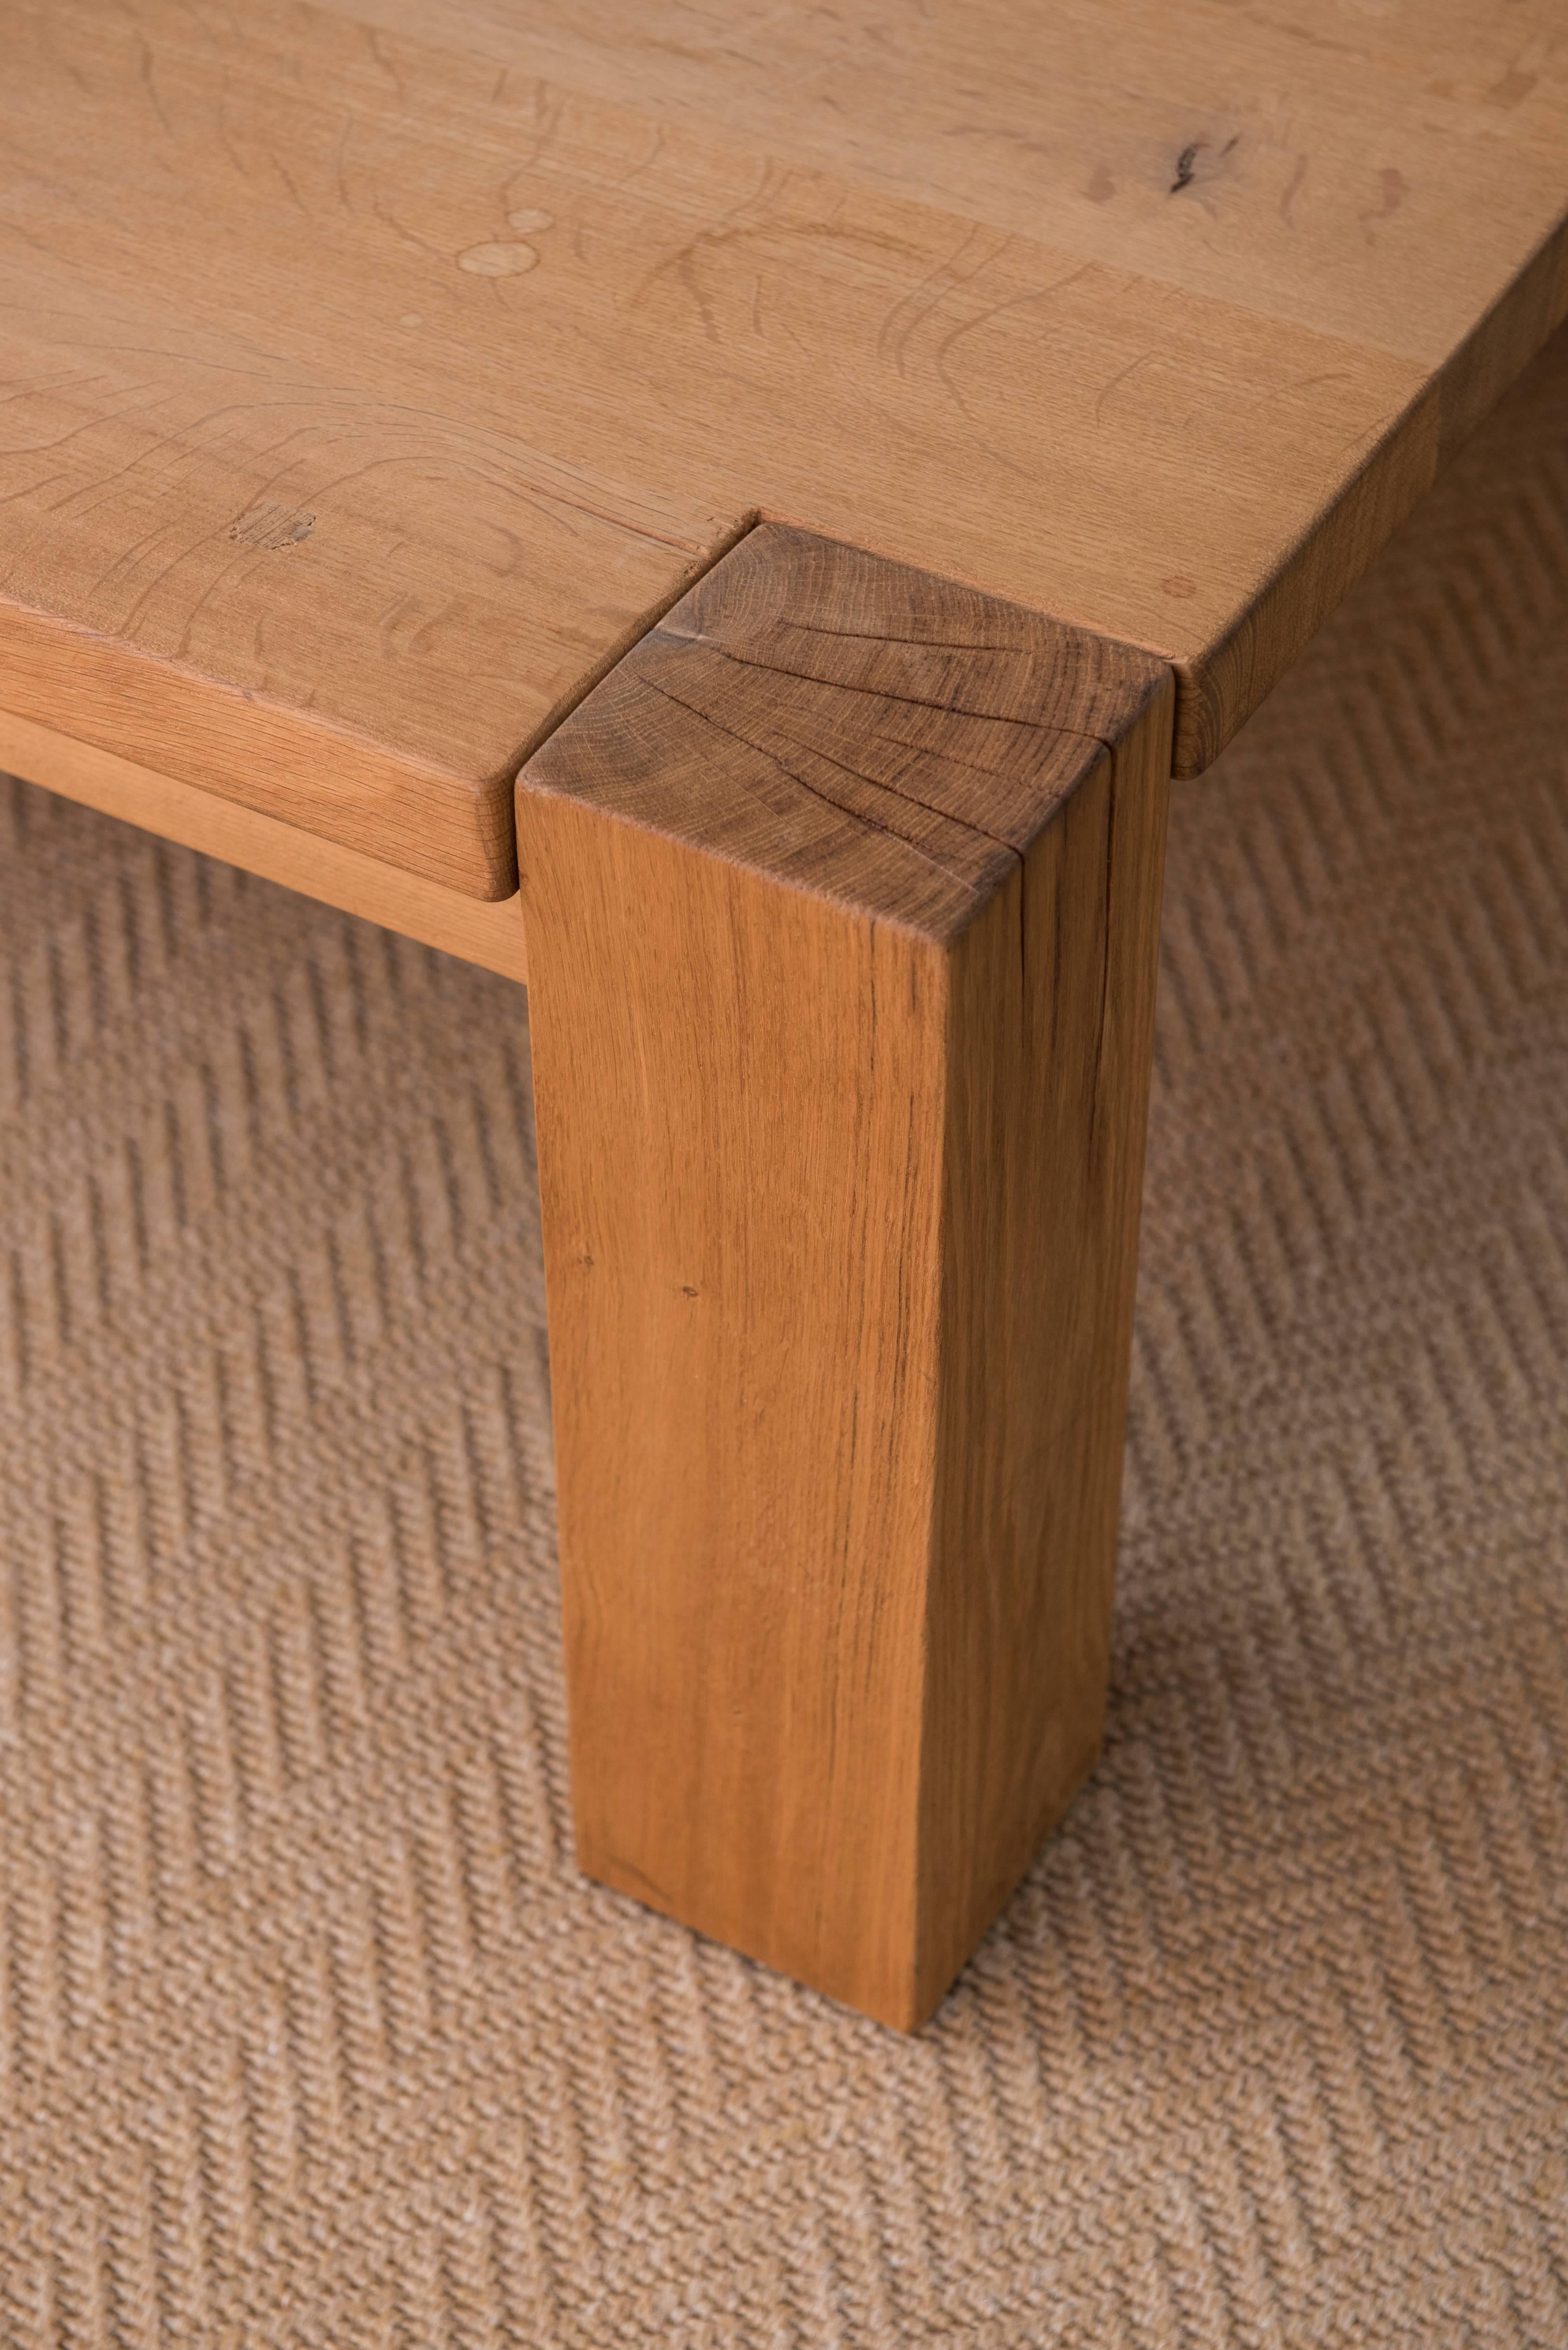 Handmade, transitional square oak coffee table.